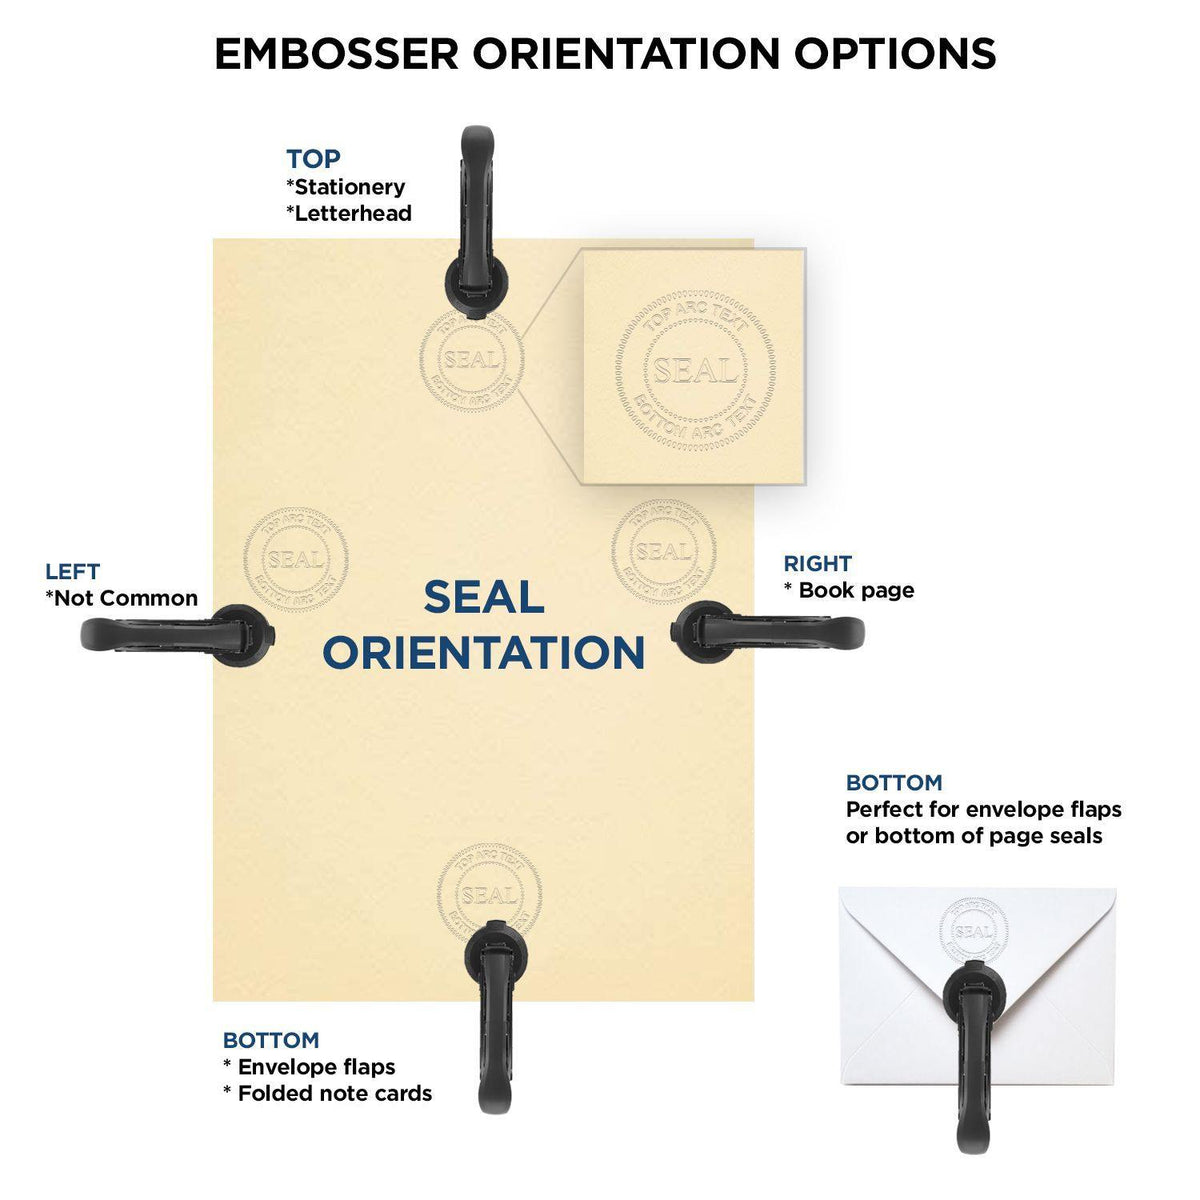 Public Weighmaster Long Reach Desk Seal Embosser - Engineer Seal Stamps - Embosser Type_Desk, Embosser Type_Long Reach, Type of Use_Professional, Use_Heavy Duty, validate-product-description